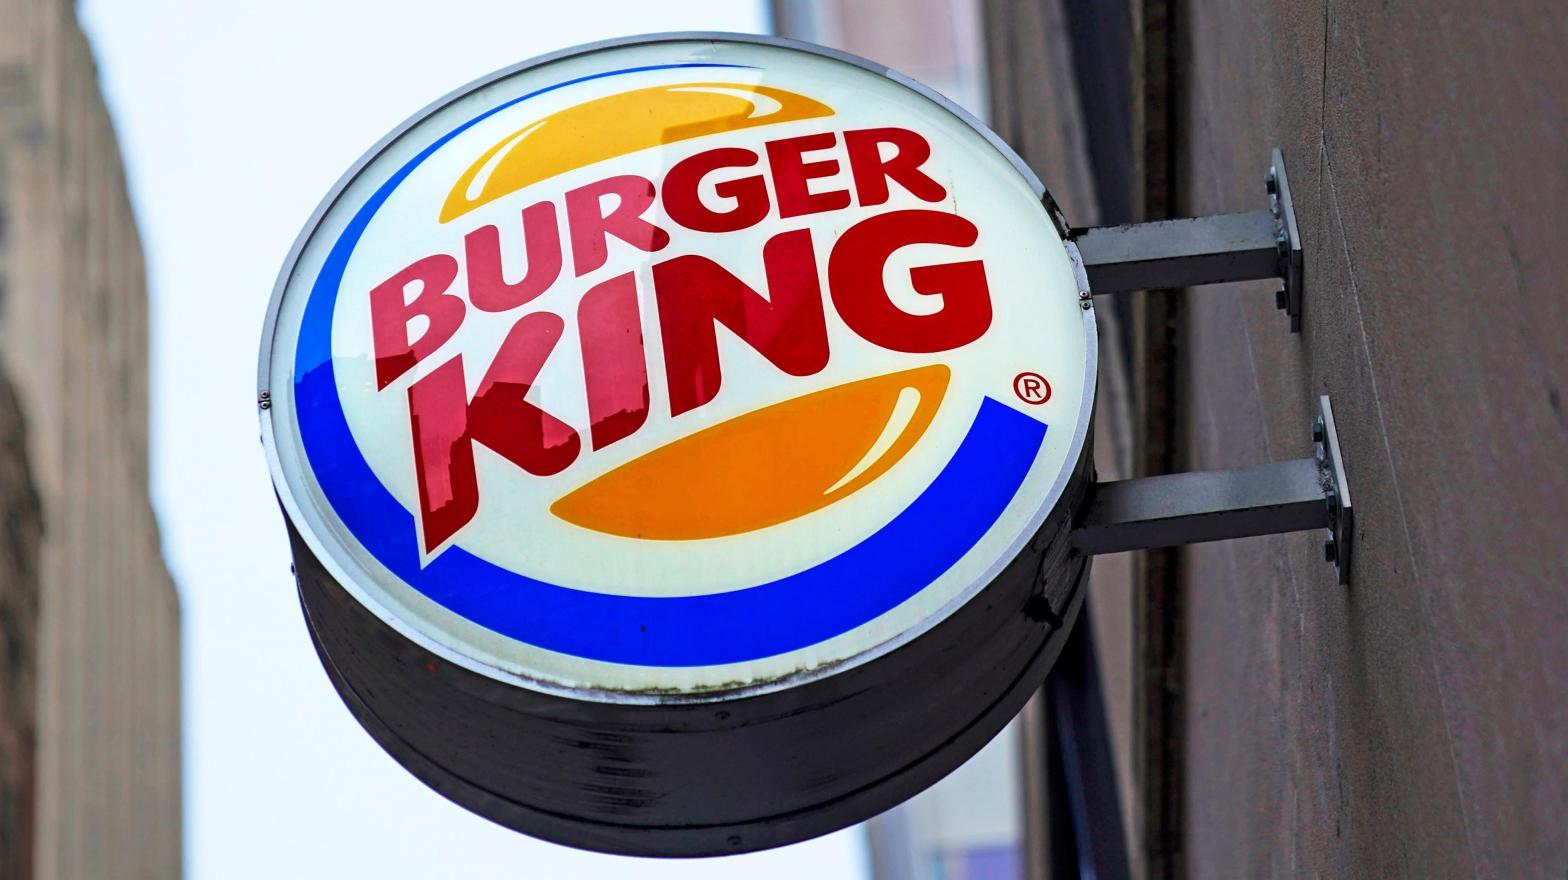 Burger King's campaign for pride month took a weird turn. (Photo: Gene J. Puskar, AP)